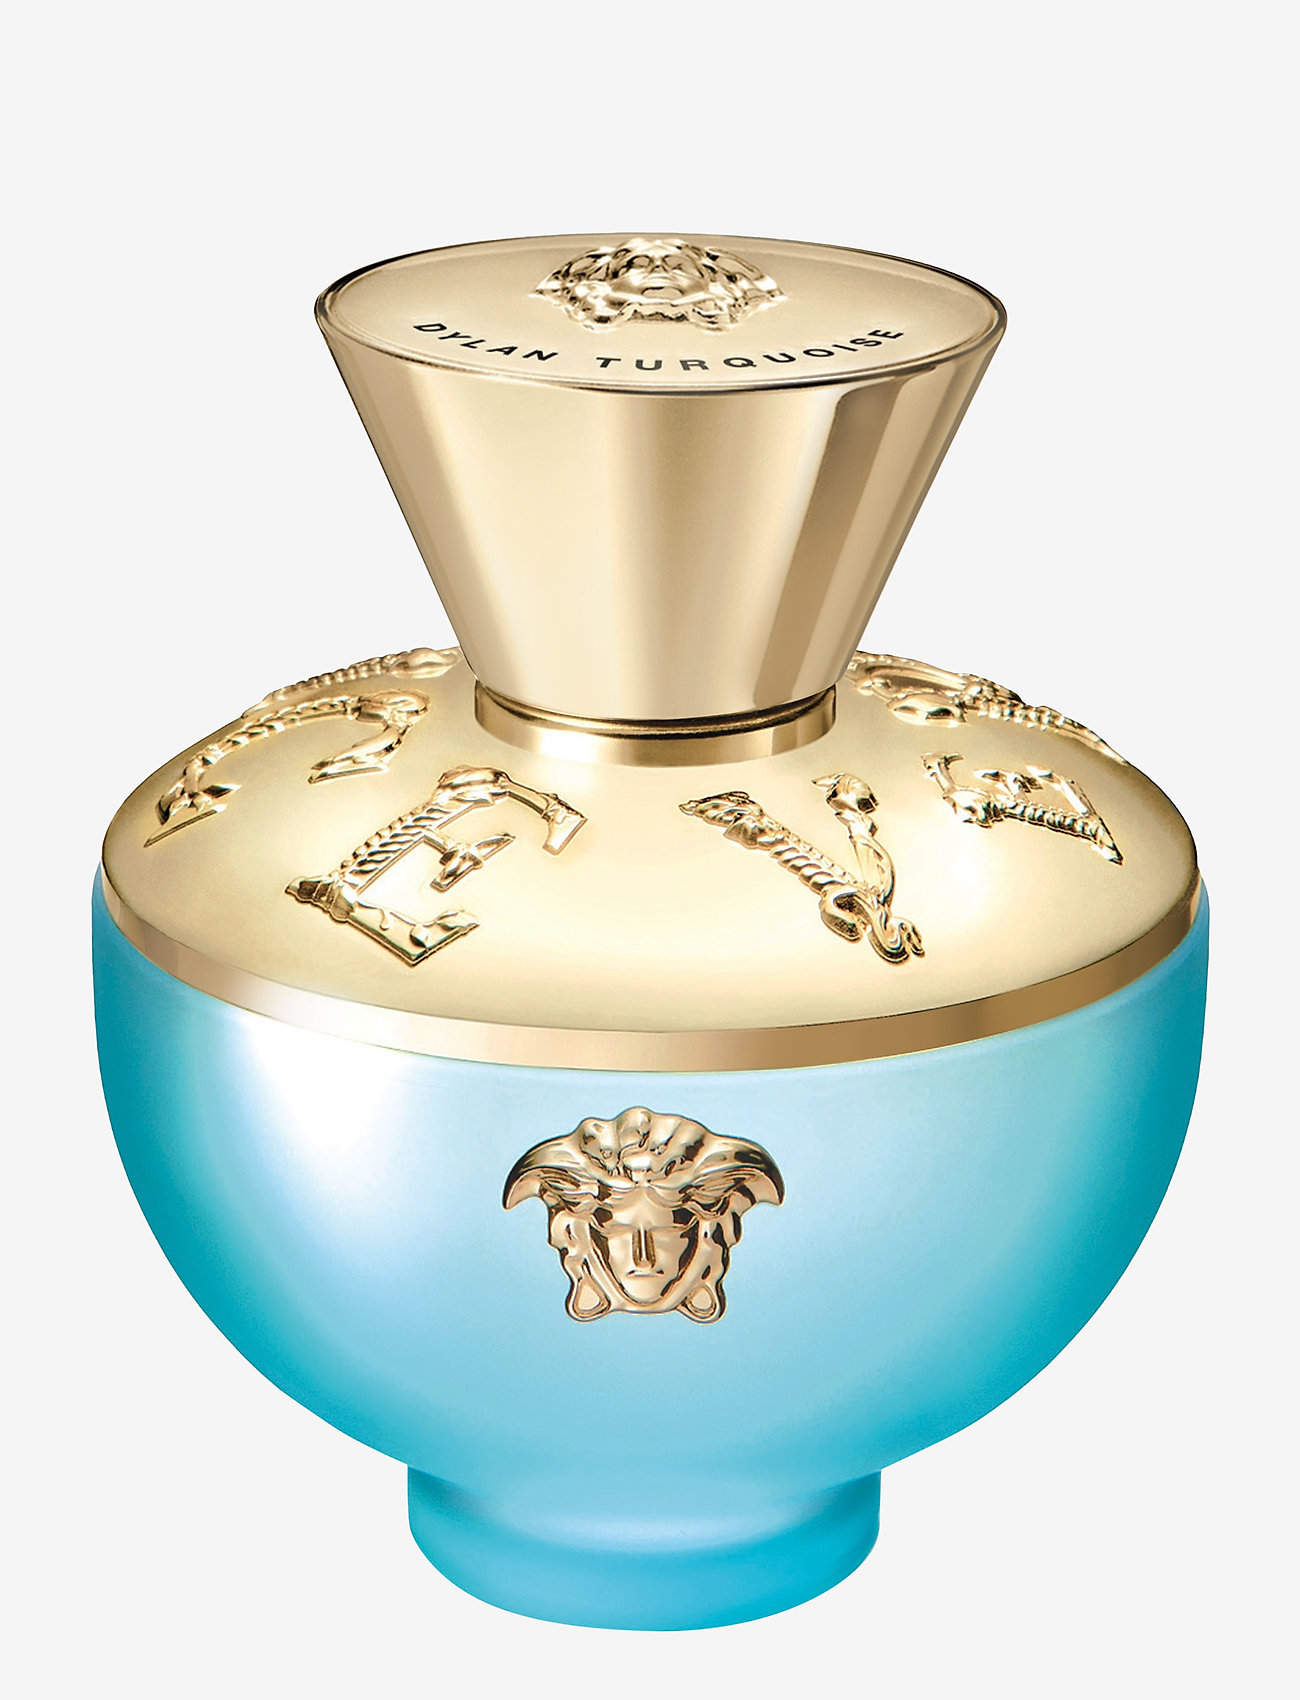 Versace Fragrance - Dylan Turquoise Pour Femme EdT - mellem 200-500 kr - clear - 0